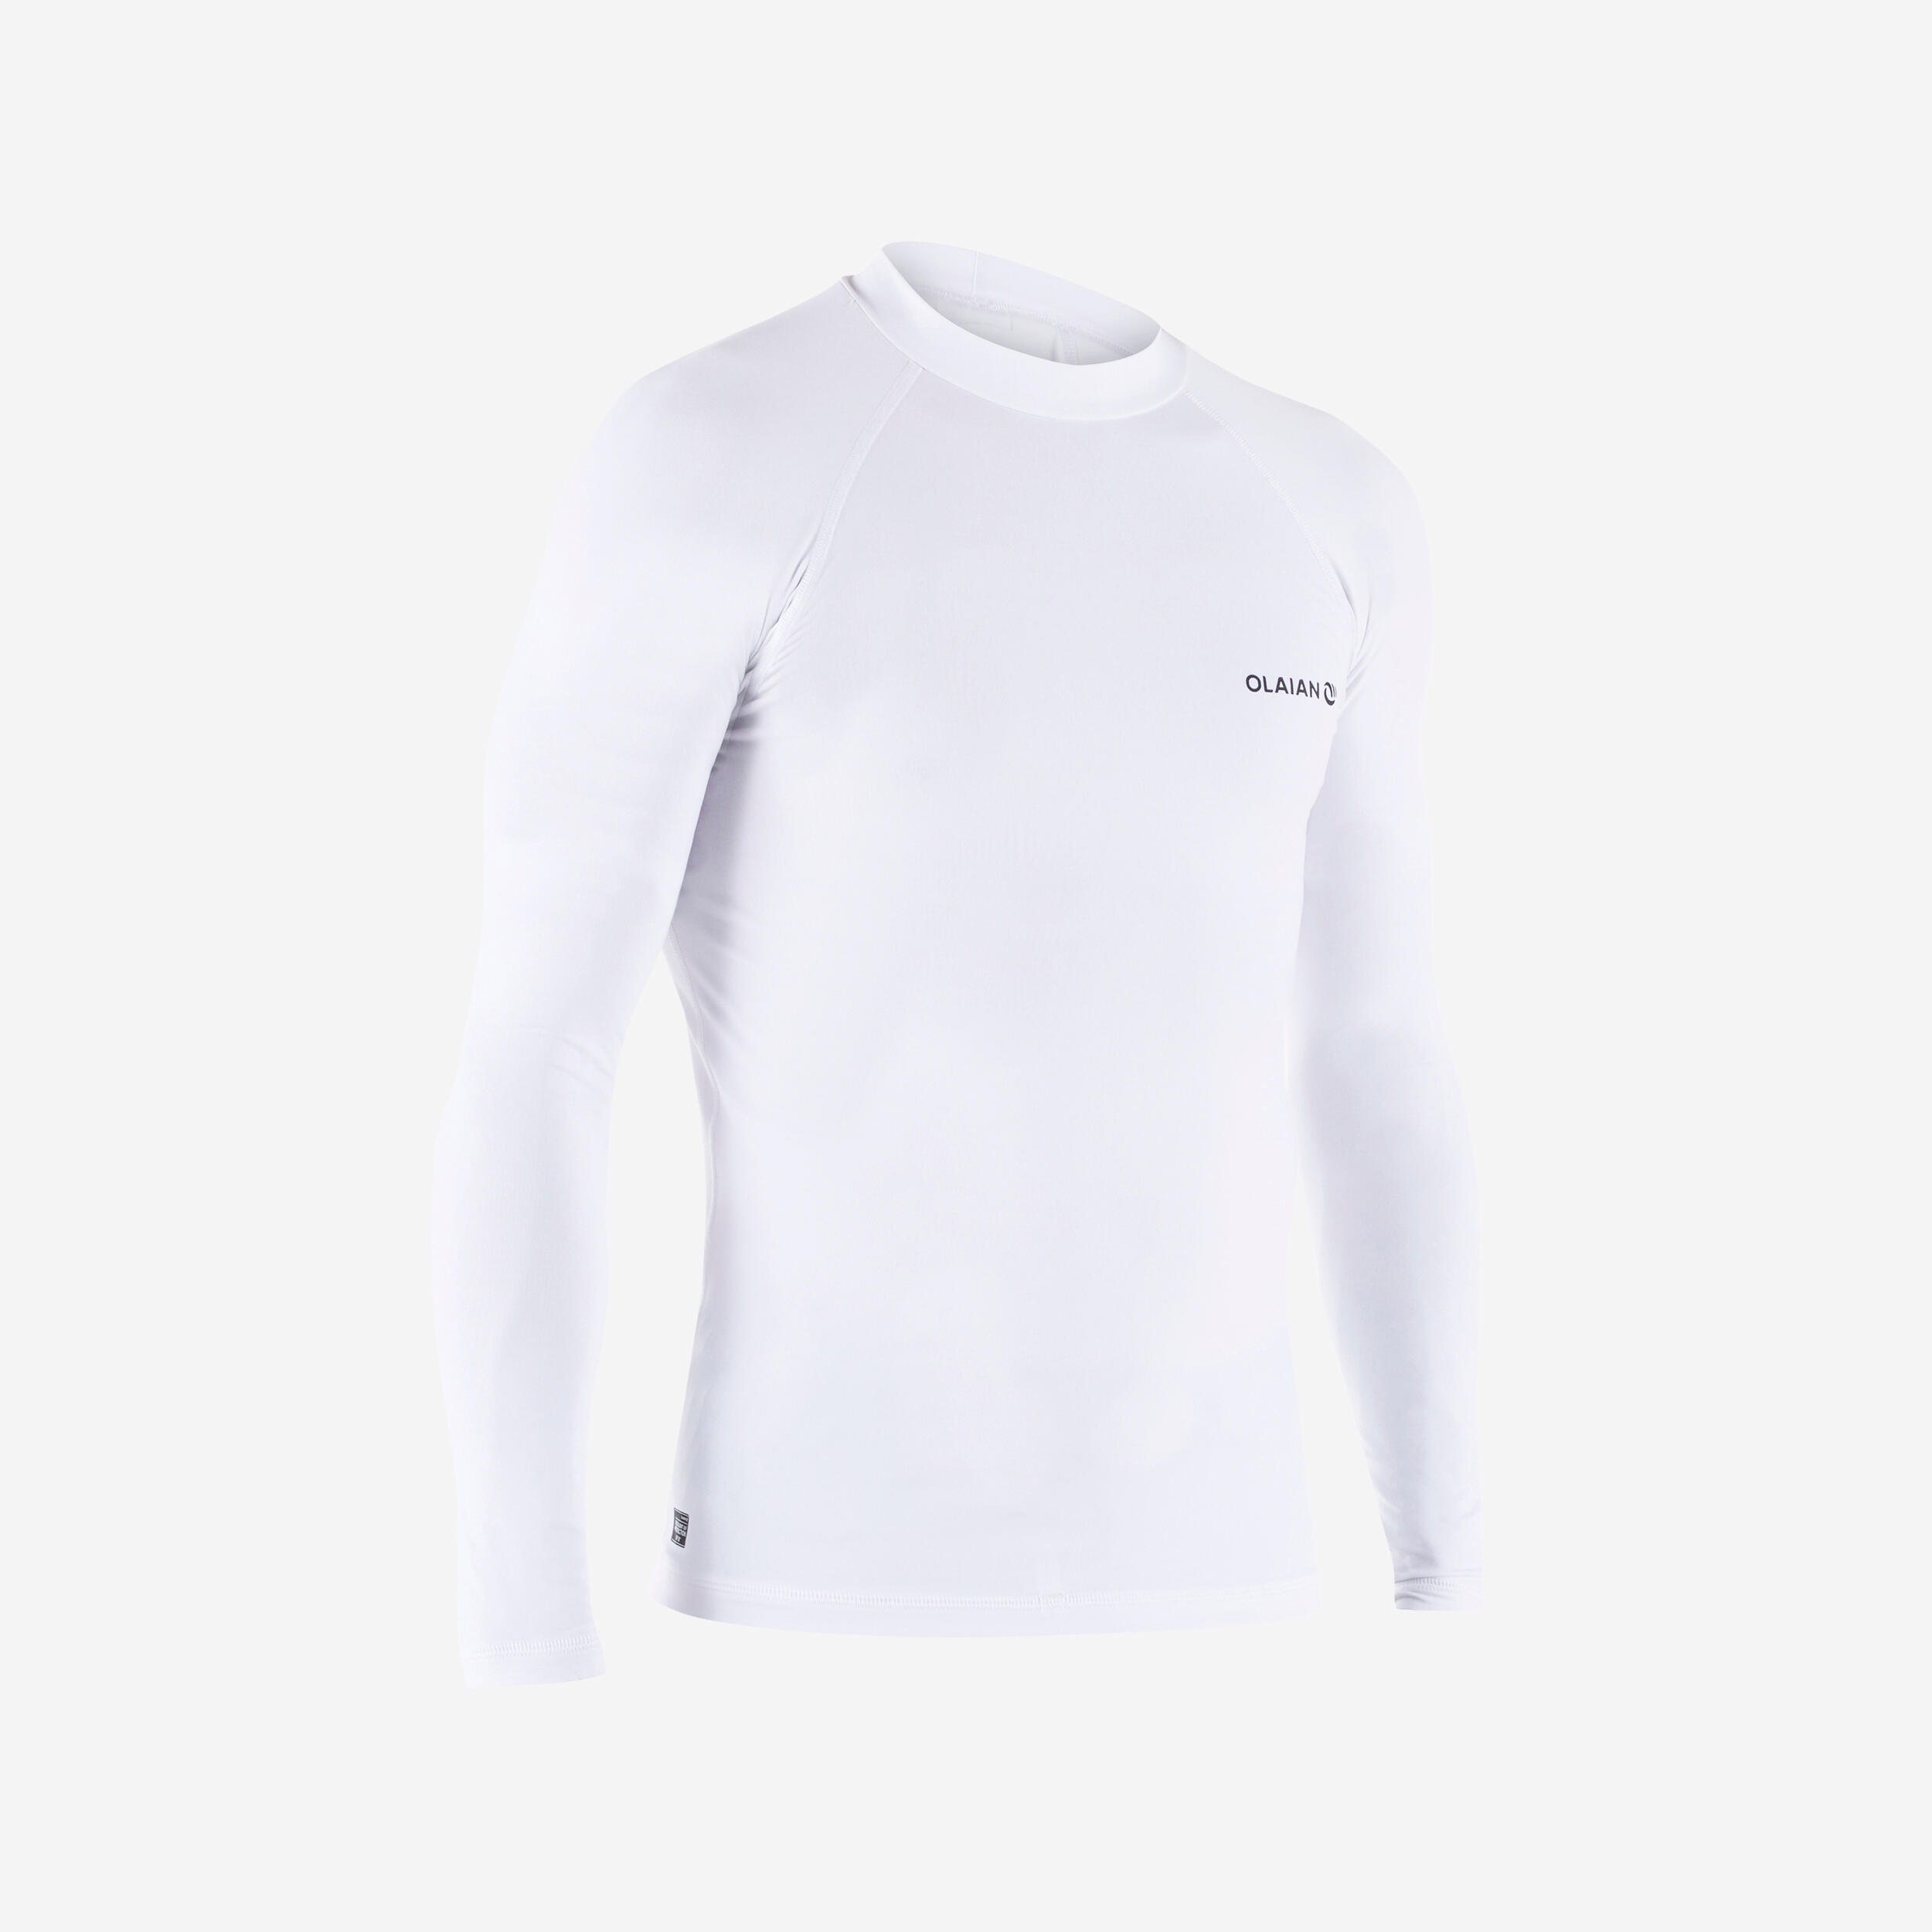 100 Men's Long Sleeve UV Protection Surfing Top T-Shirt - White OLAIAN